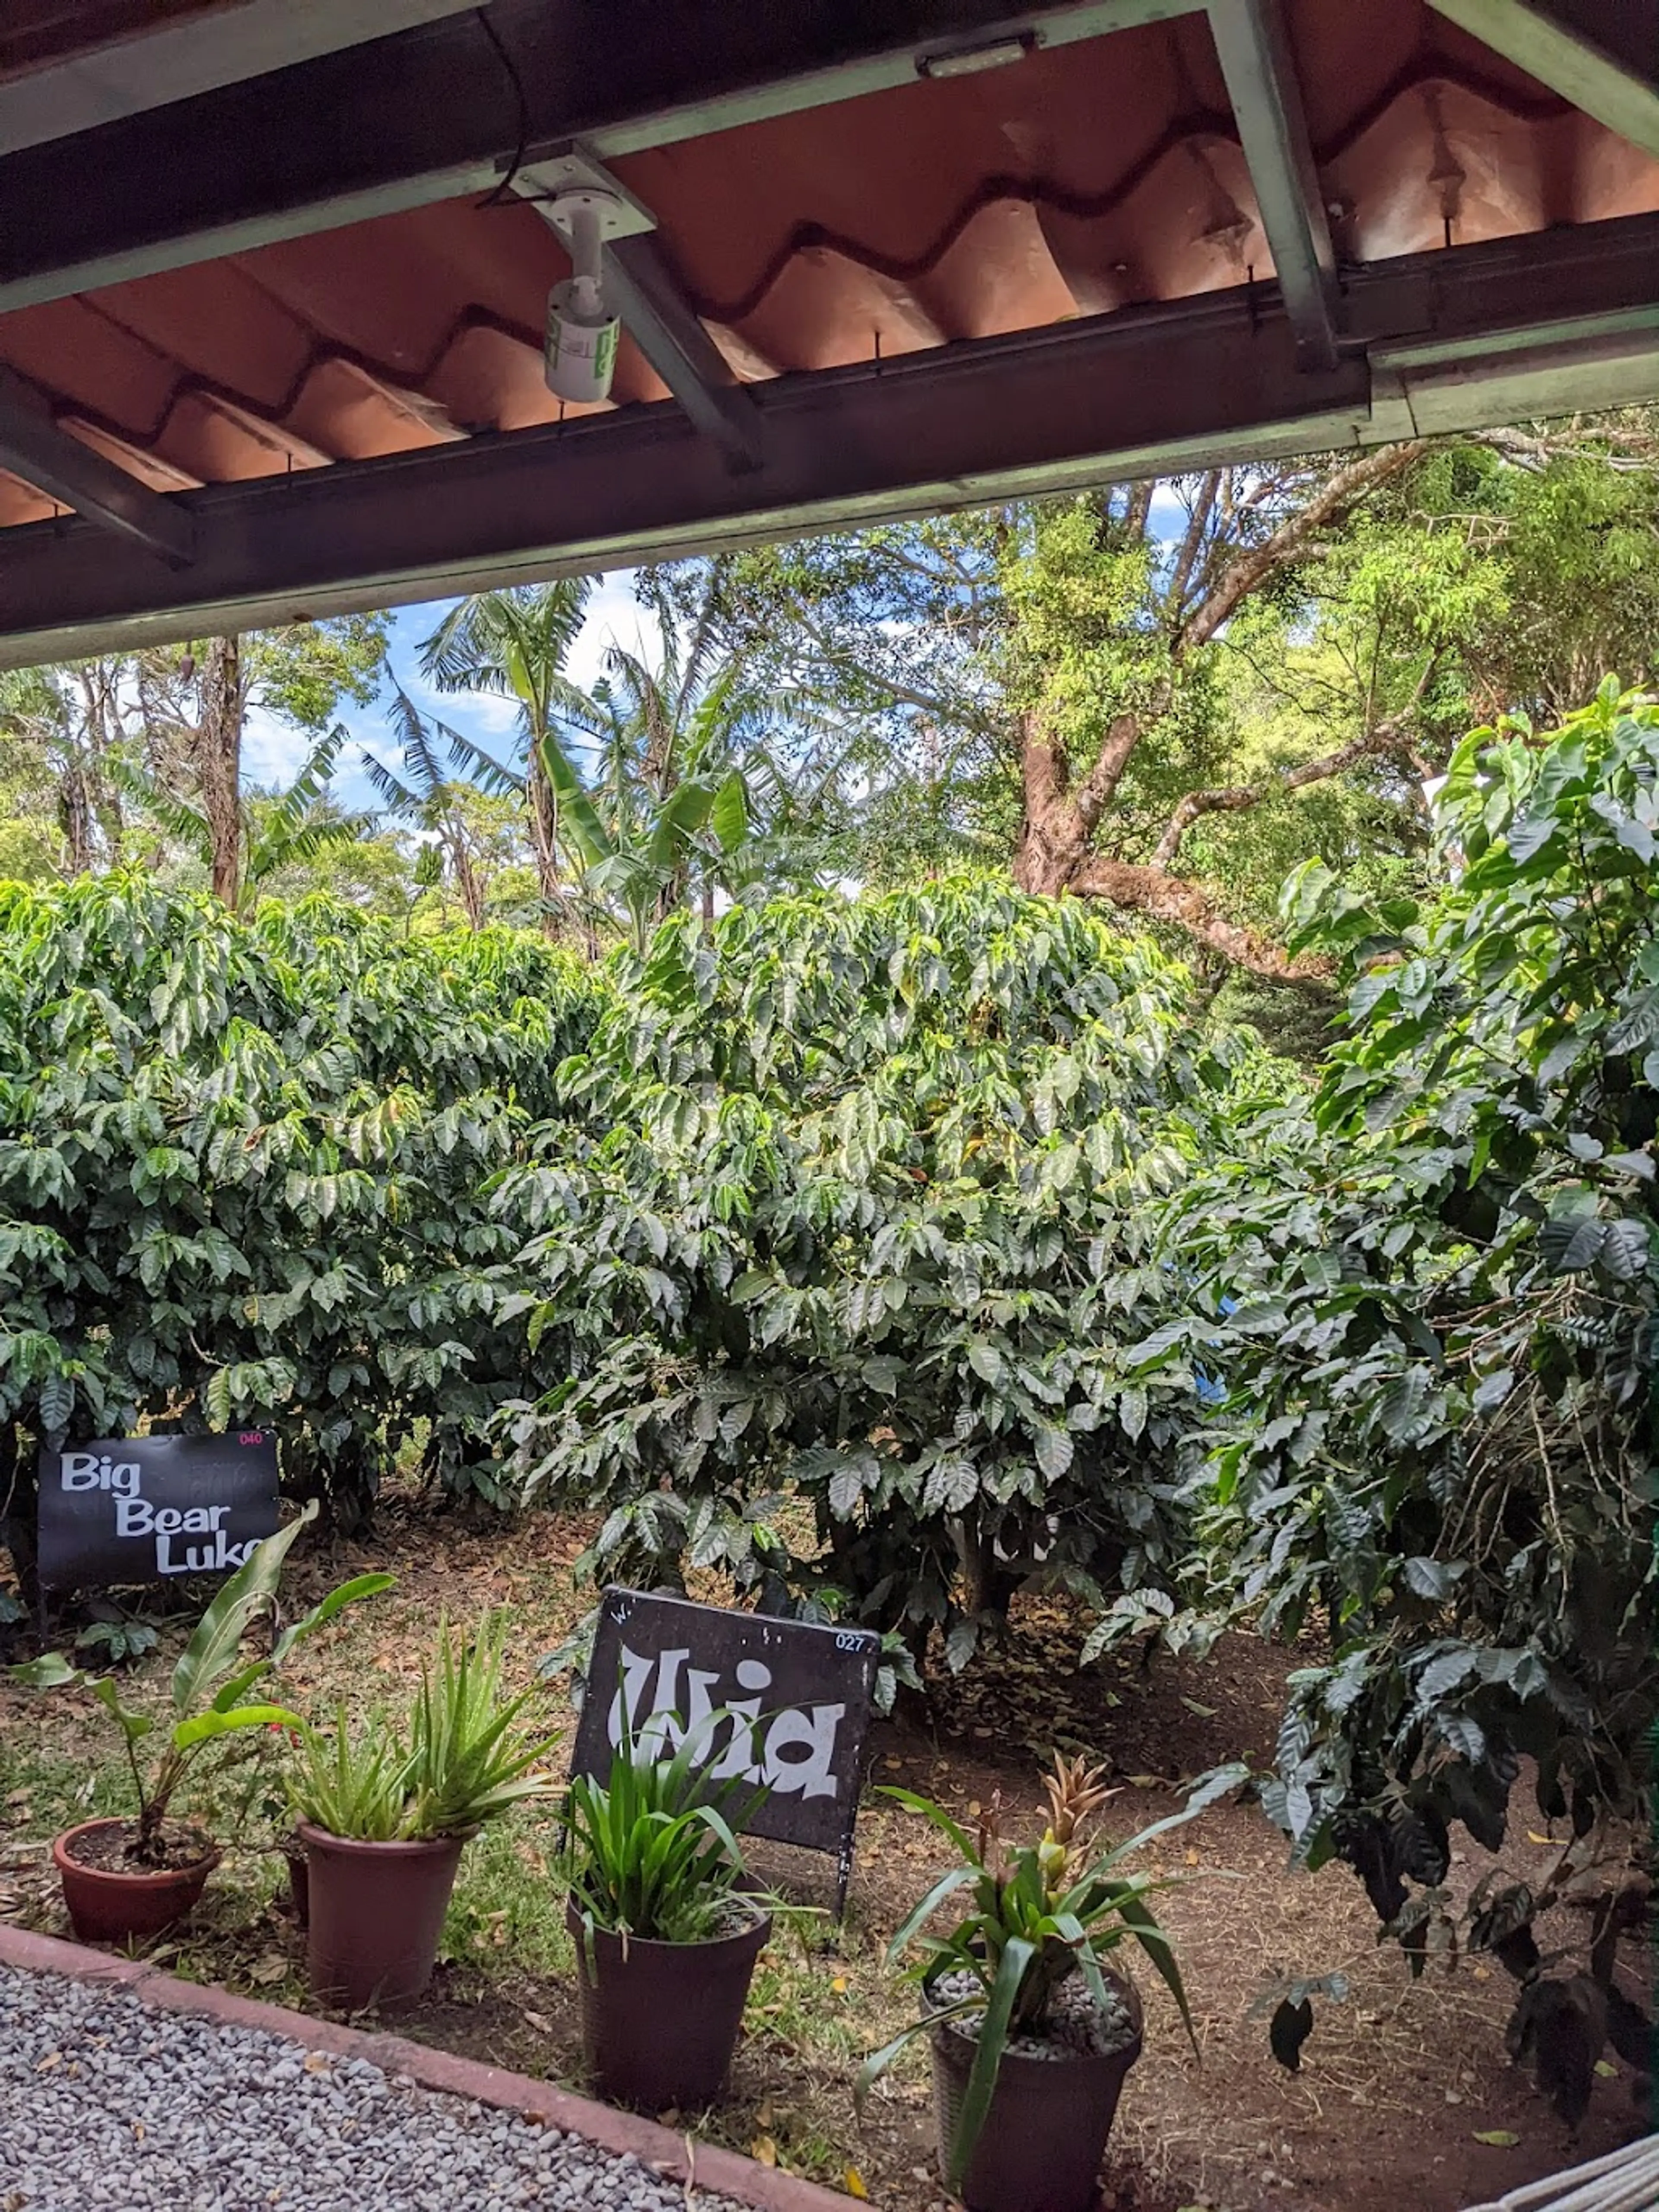 Coffee Plantation Tour